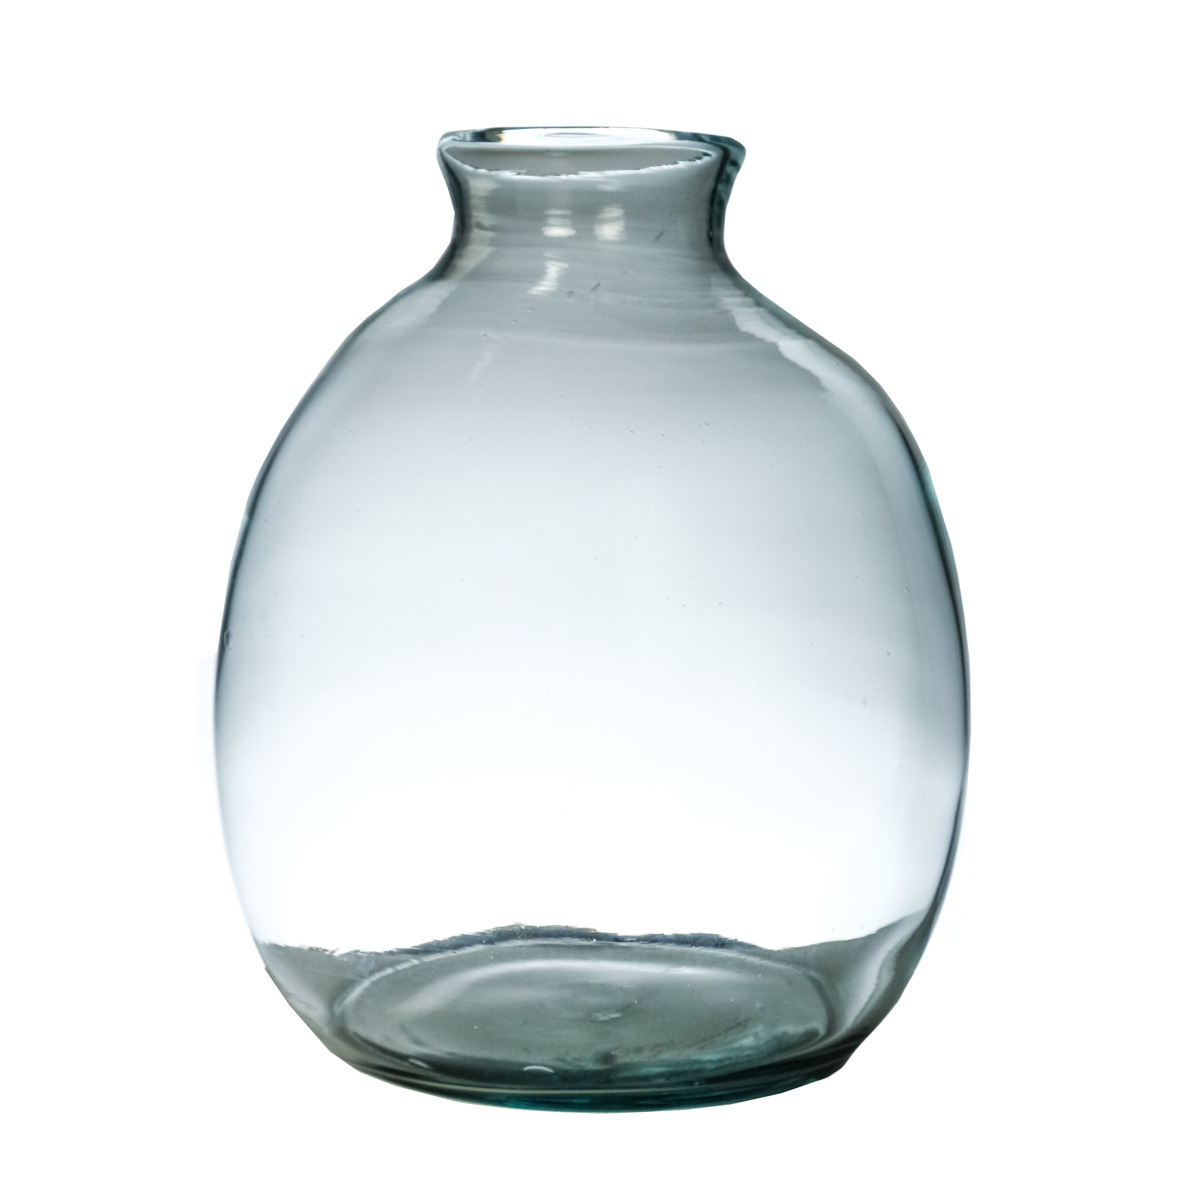 Hakbijl Glass Bloemenvaas Cheryl - transparant - eco glas - D24 x H27 cm - flesvaas -